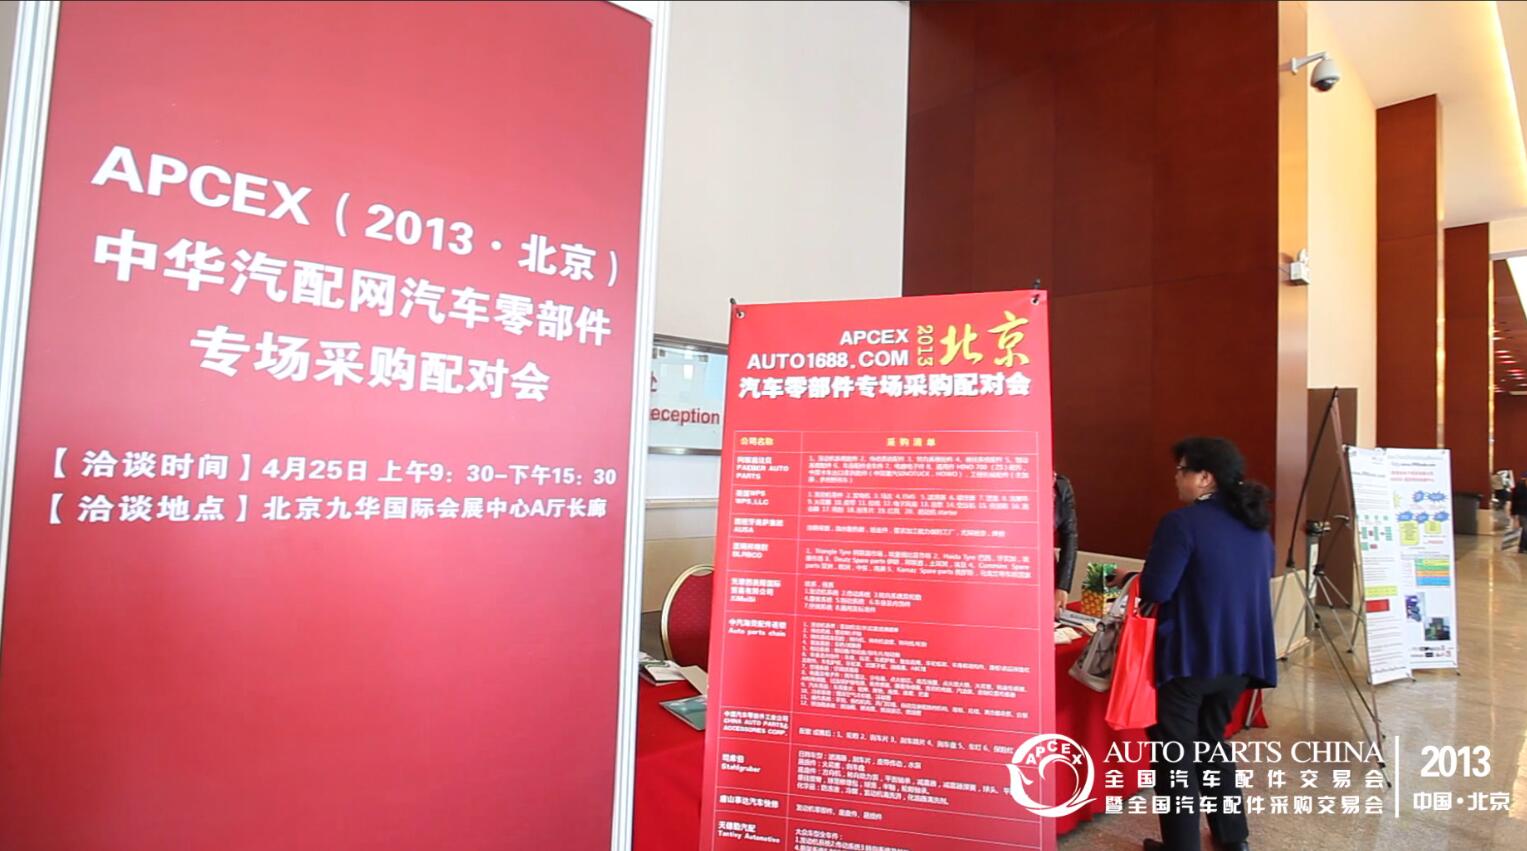 APCEX（2013·北京）中华汽配网汽车零部件专场采购配对会.jpg